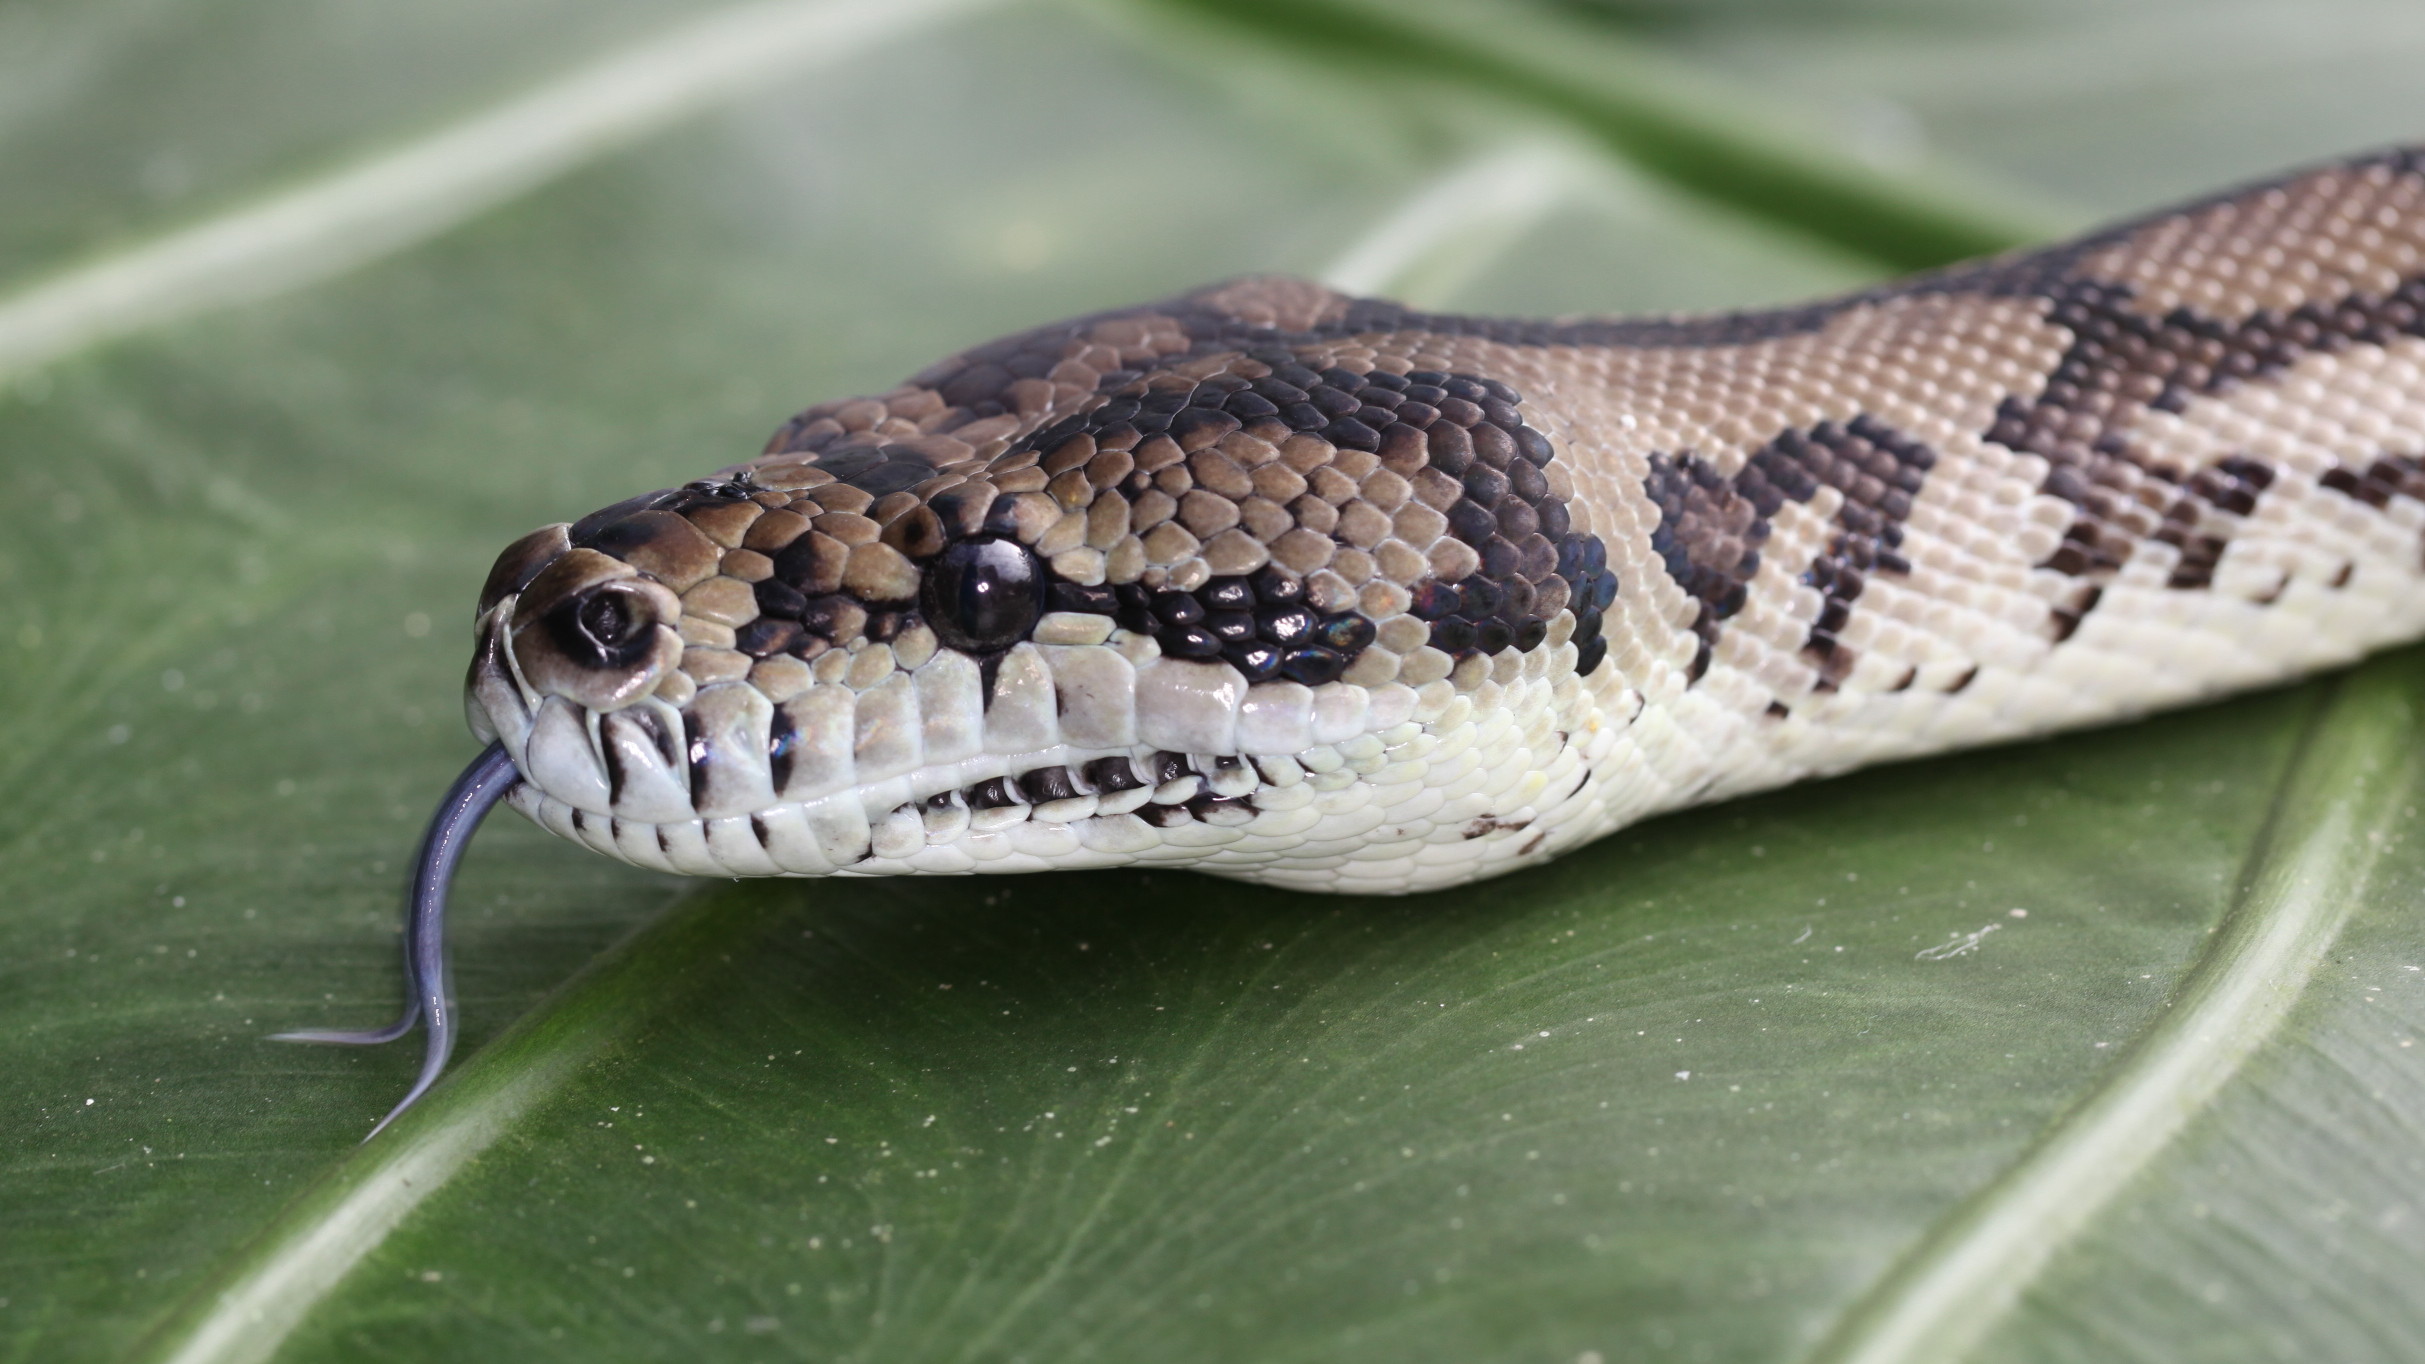 reptiles can be found in the Nocturnal Habitat at Wildlife Habitat in Port Douglas